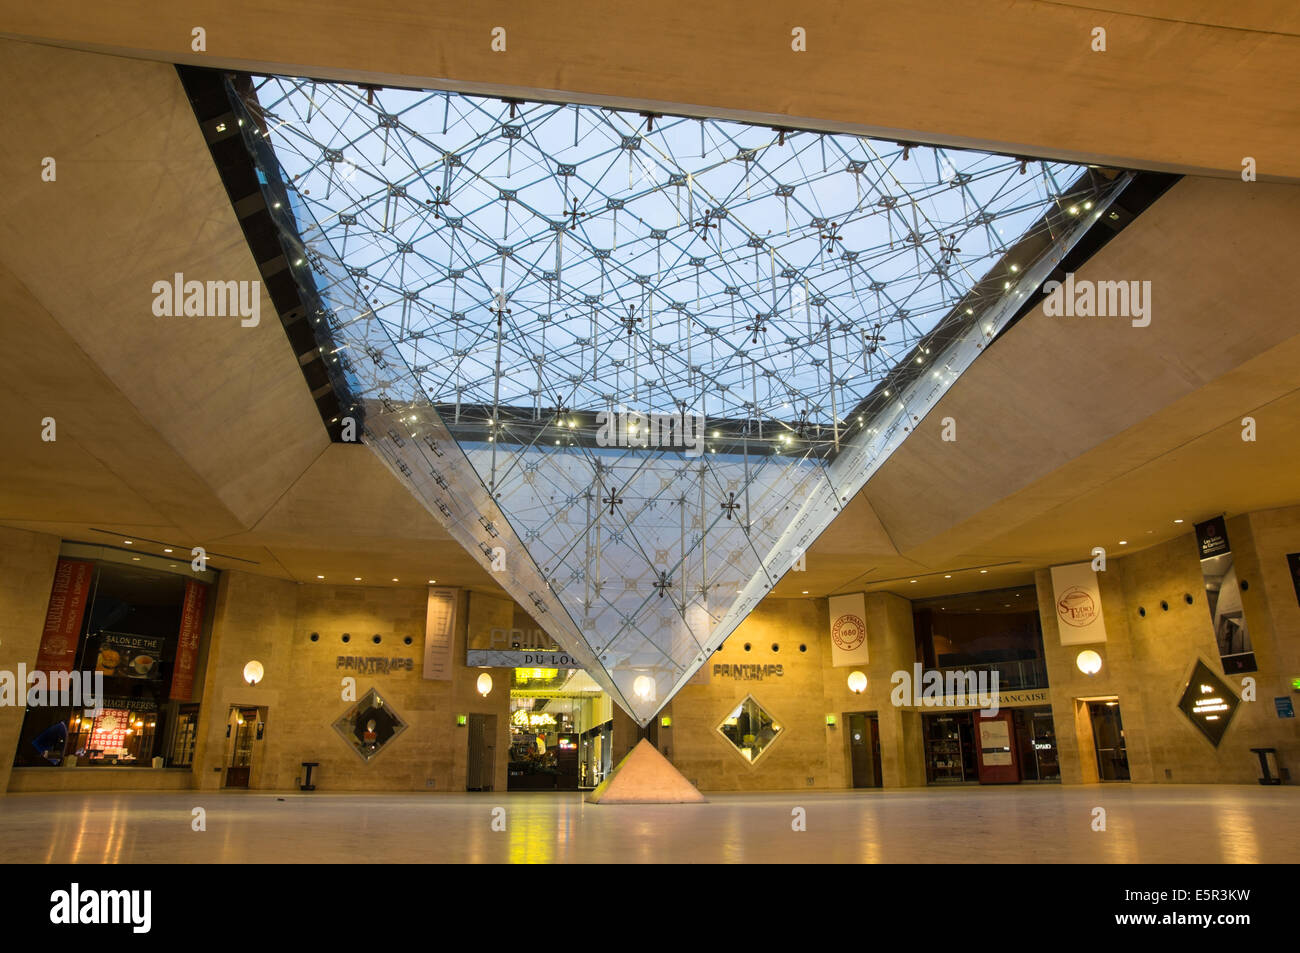 La Pyramide Inversée, The Inverted Pyramid im Einkaufszentrum Carrousel du Louvre, Paris, Frankreich Stockfoto